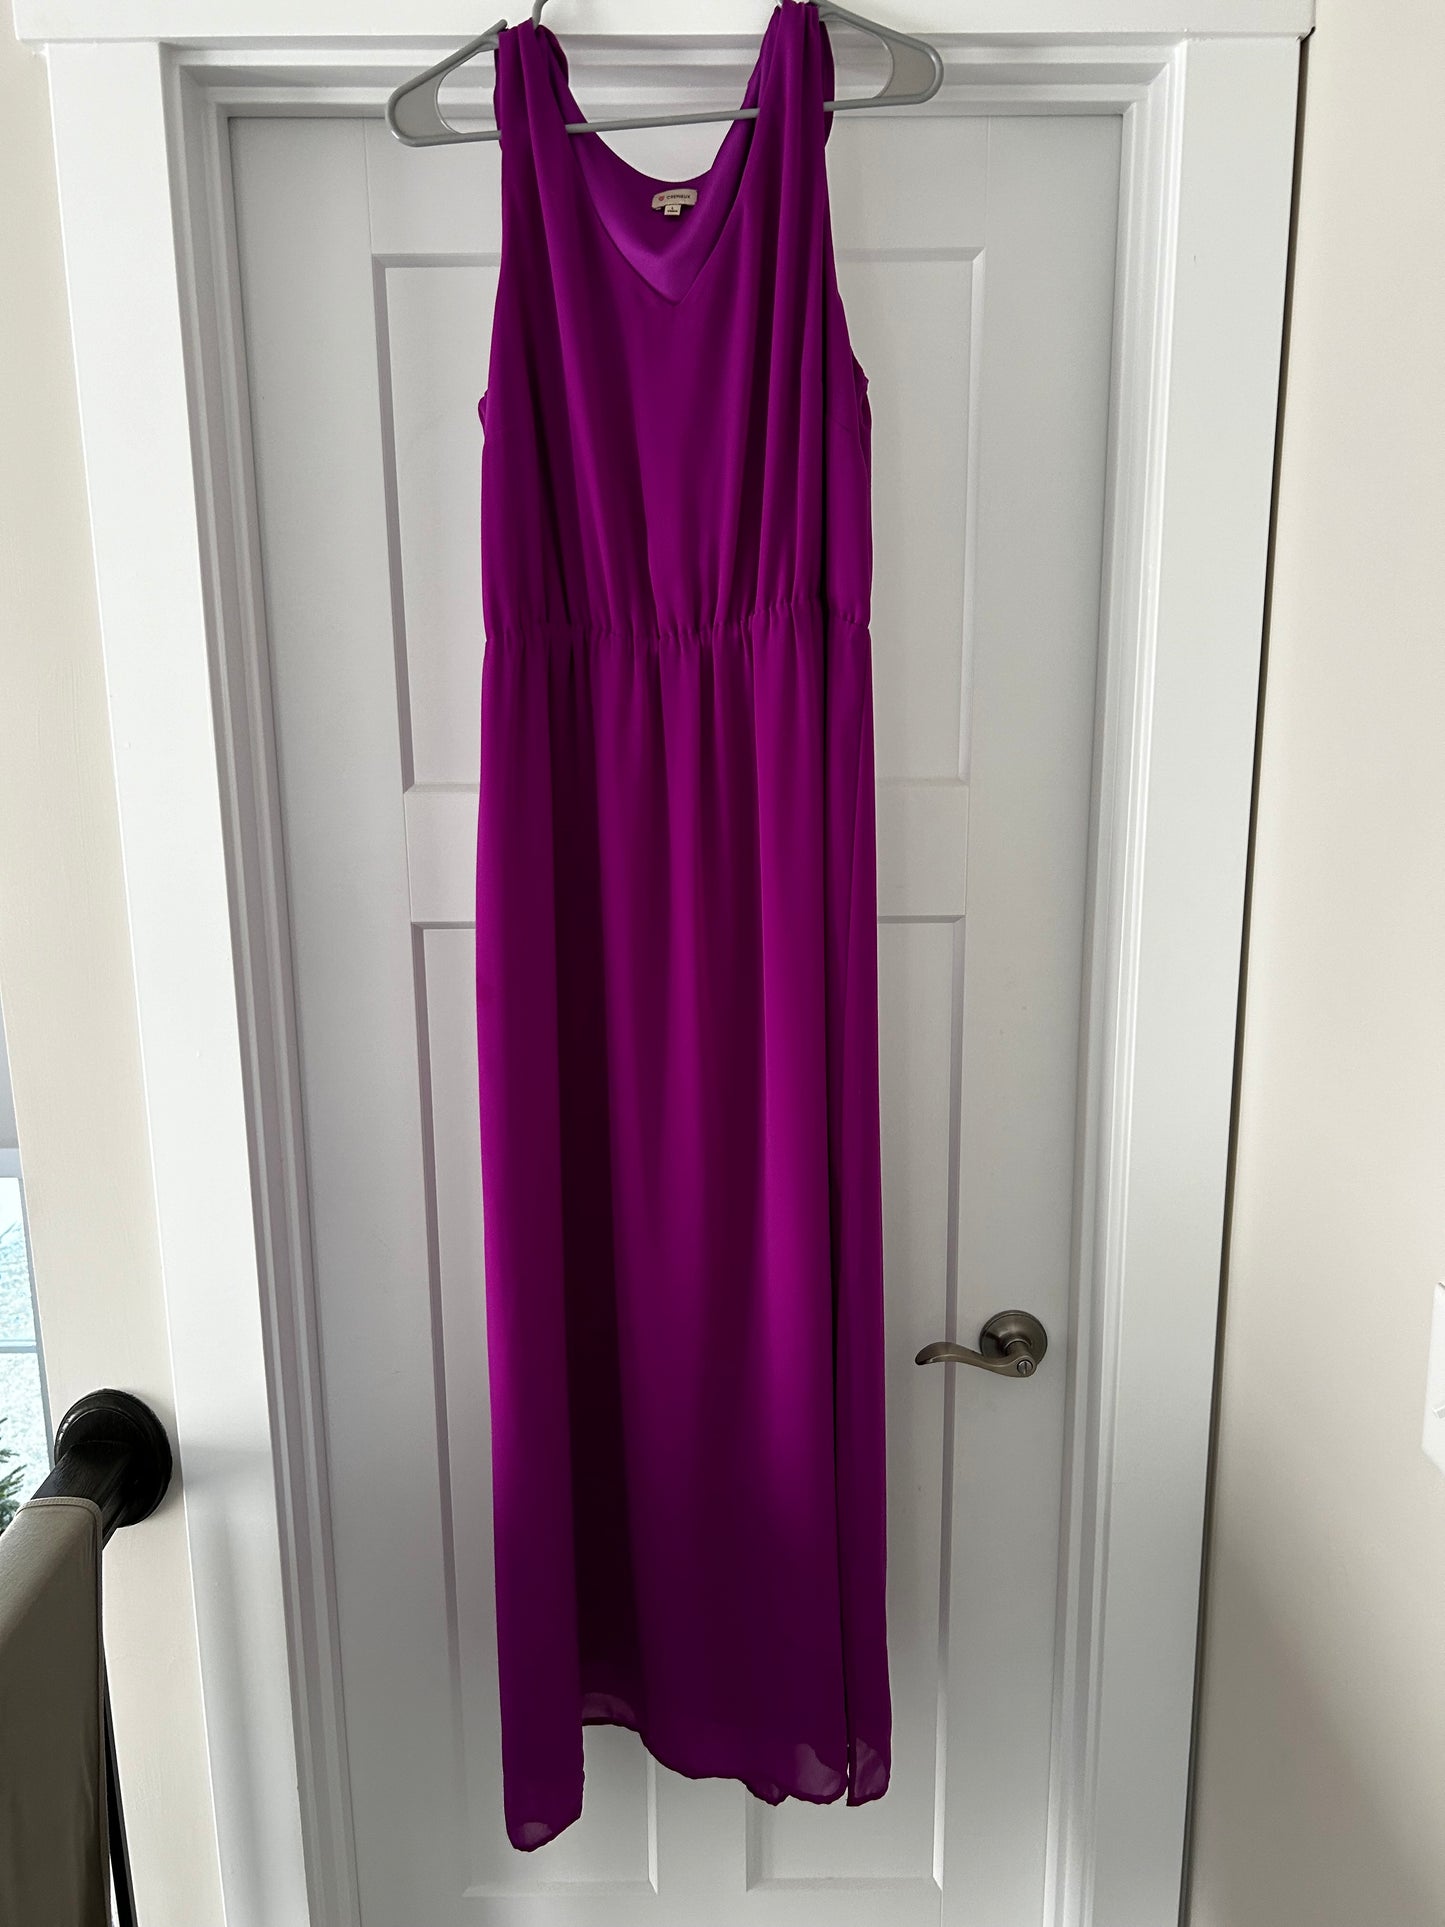 NWT Size Large Women's Cremieux Purple Maxi Dress